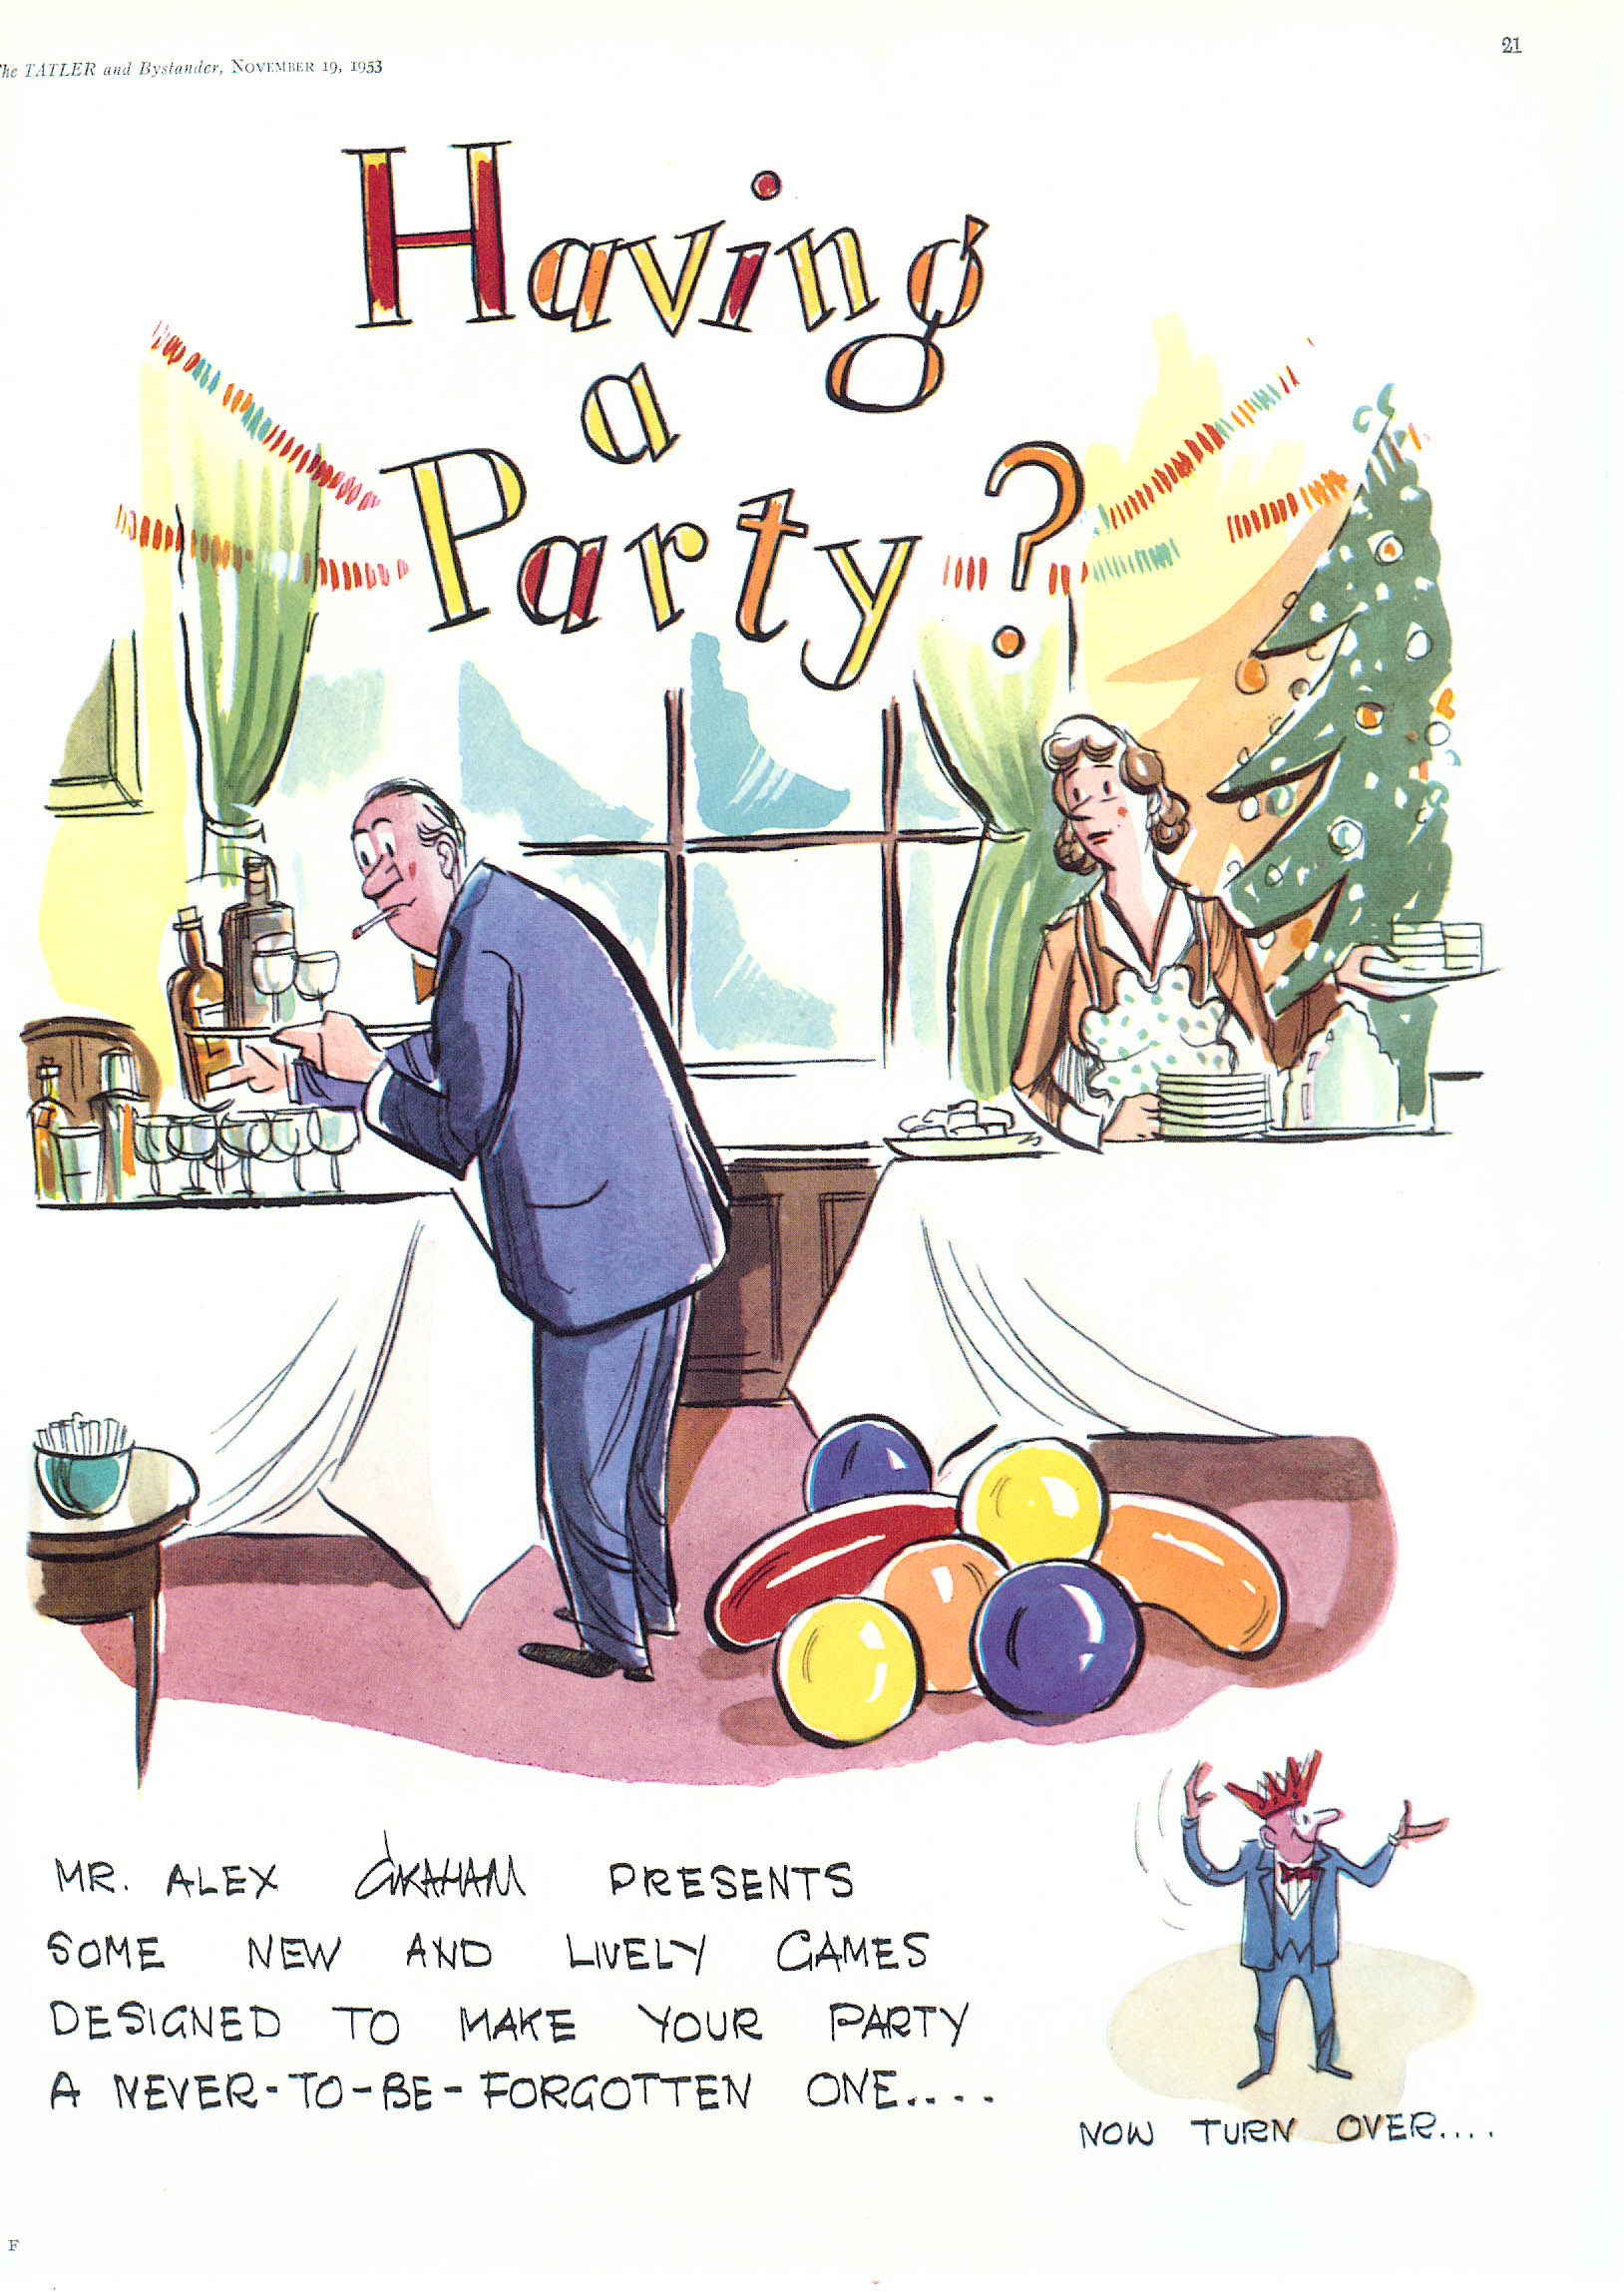 tatler-and-bystander-party-1953-alex-graham-illustrator